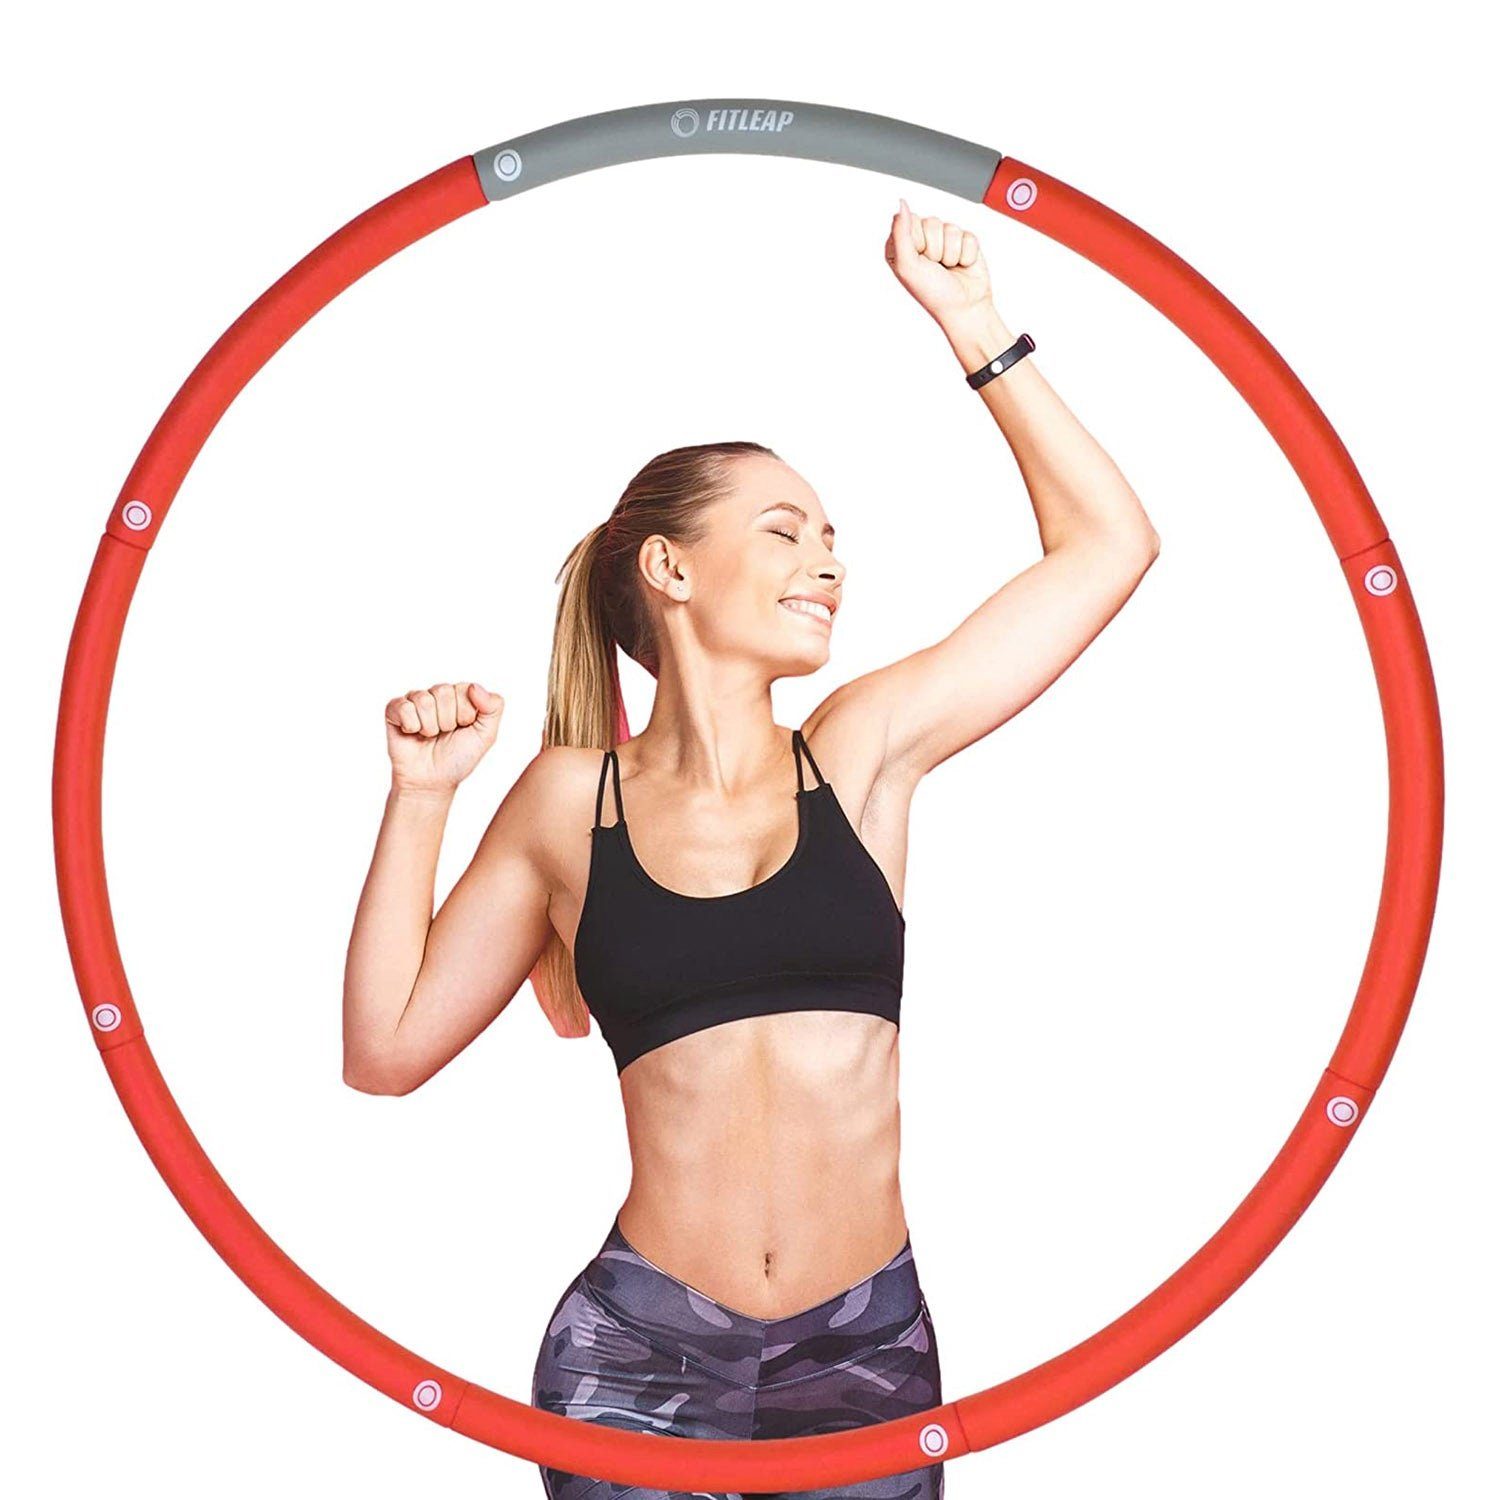 KLAMER Hula-Hoop-Reifen Fitleap Hula Hoop und Erwachsen… für Reifen Hula Hoop Massage, Fitness